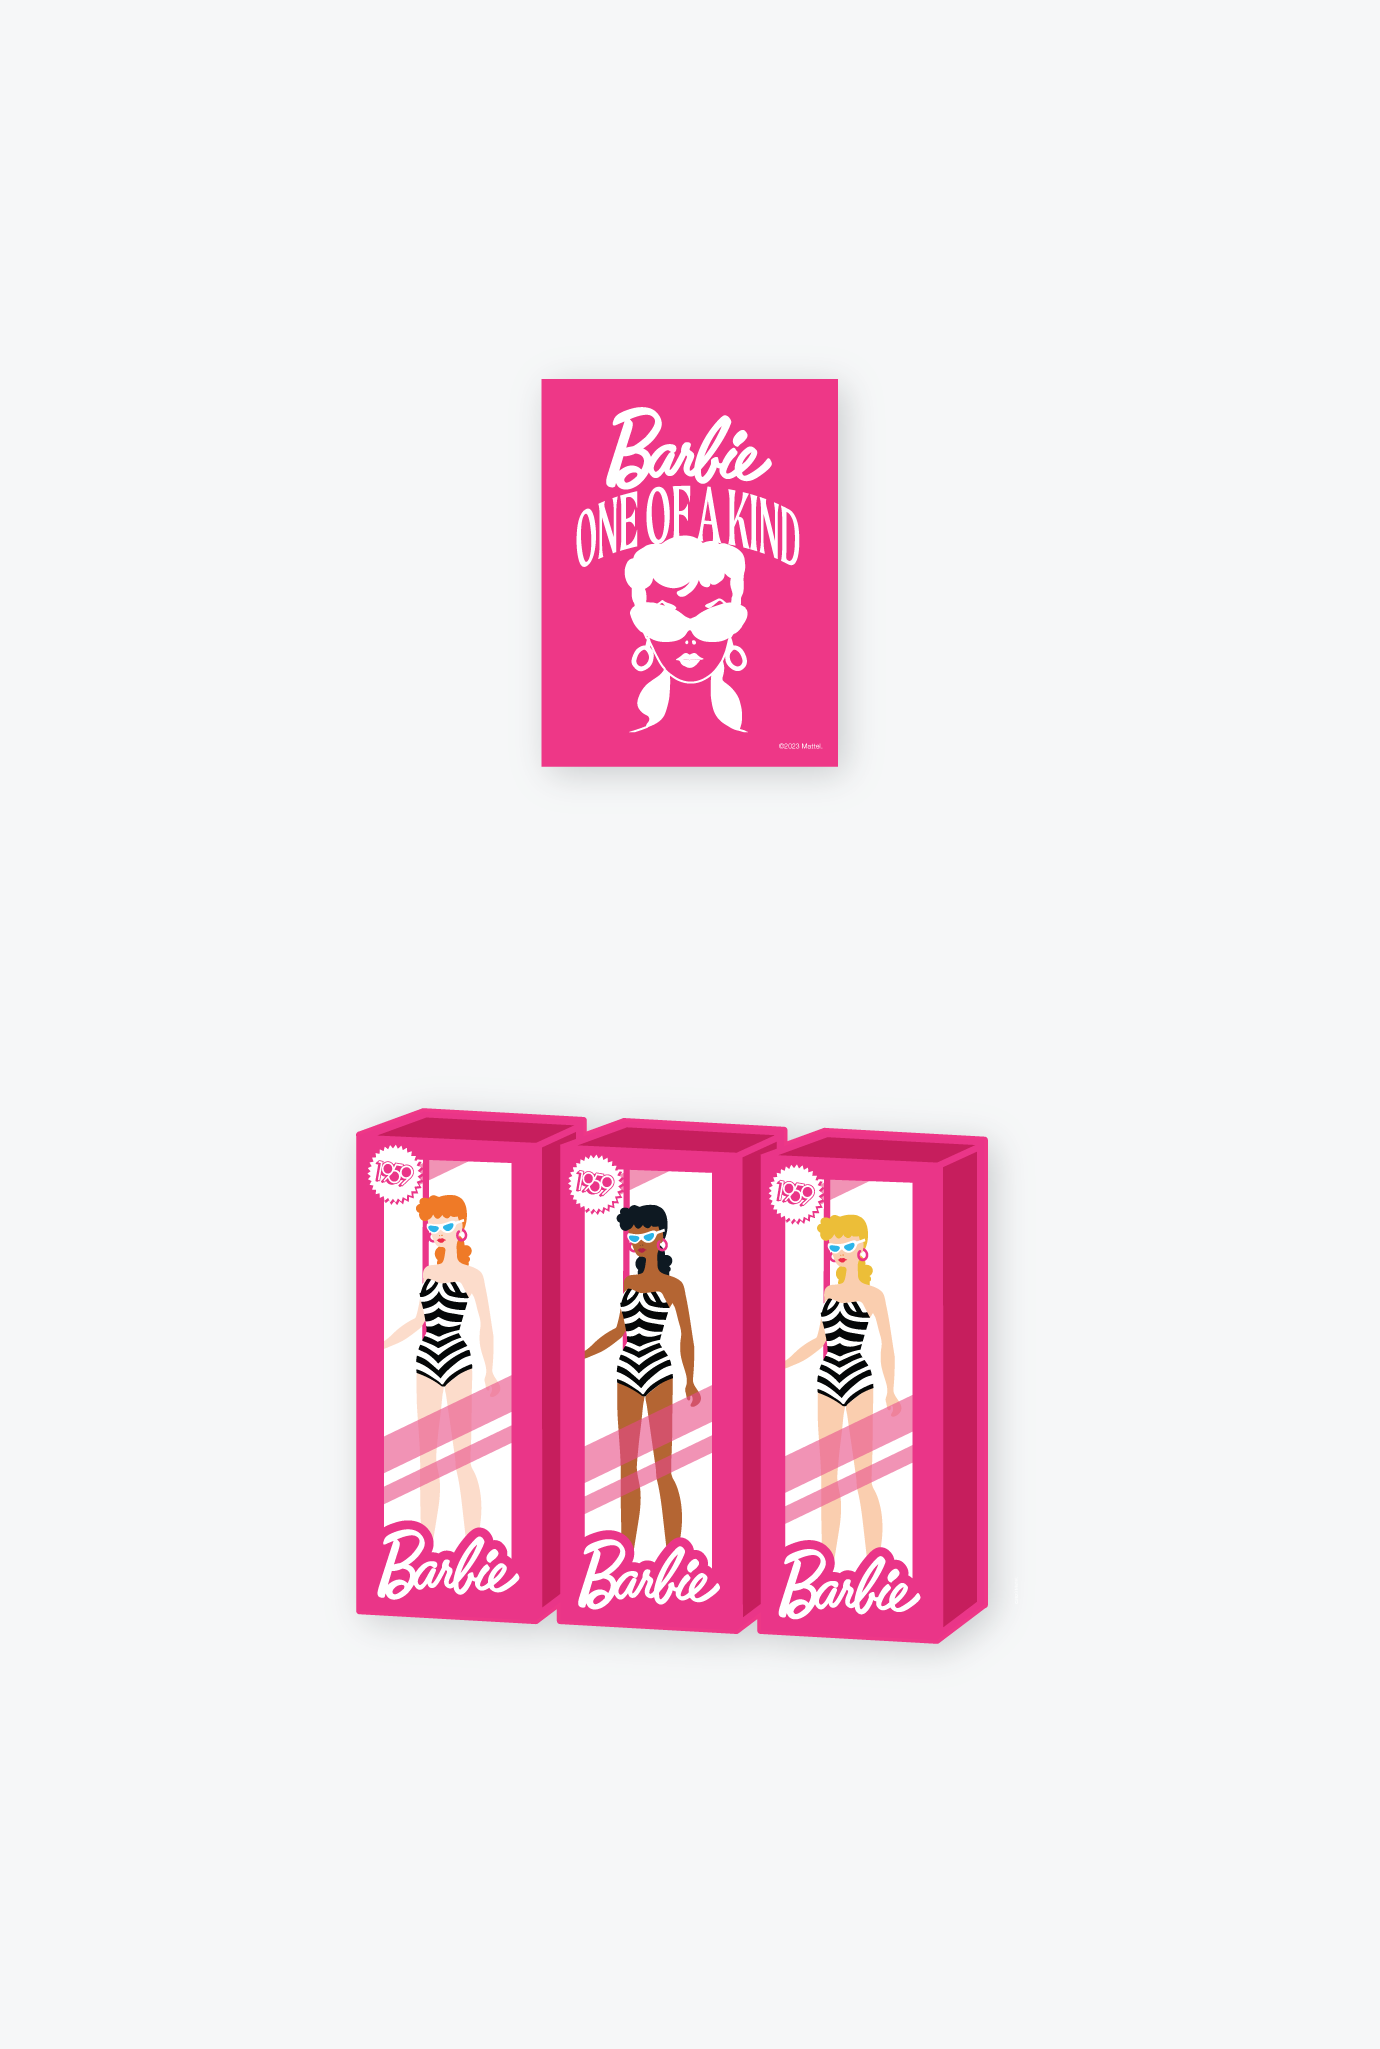 Barbie Sticker Pack